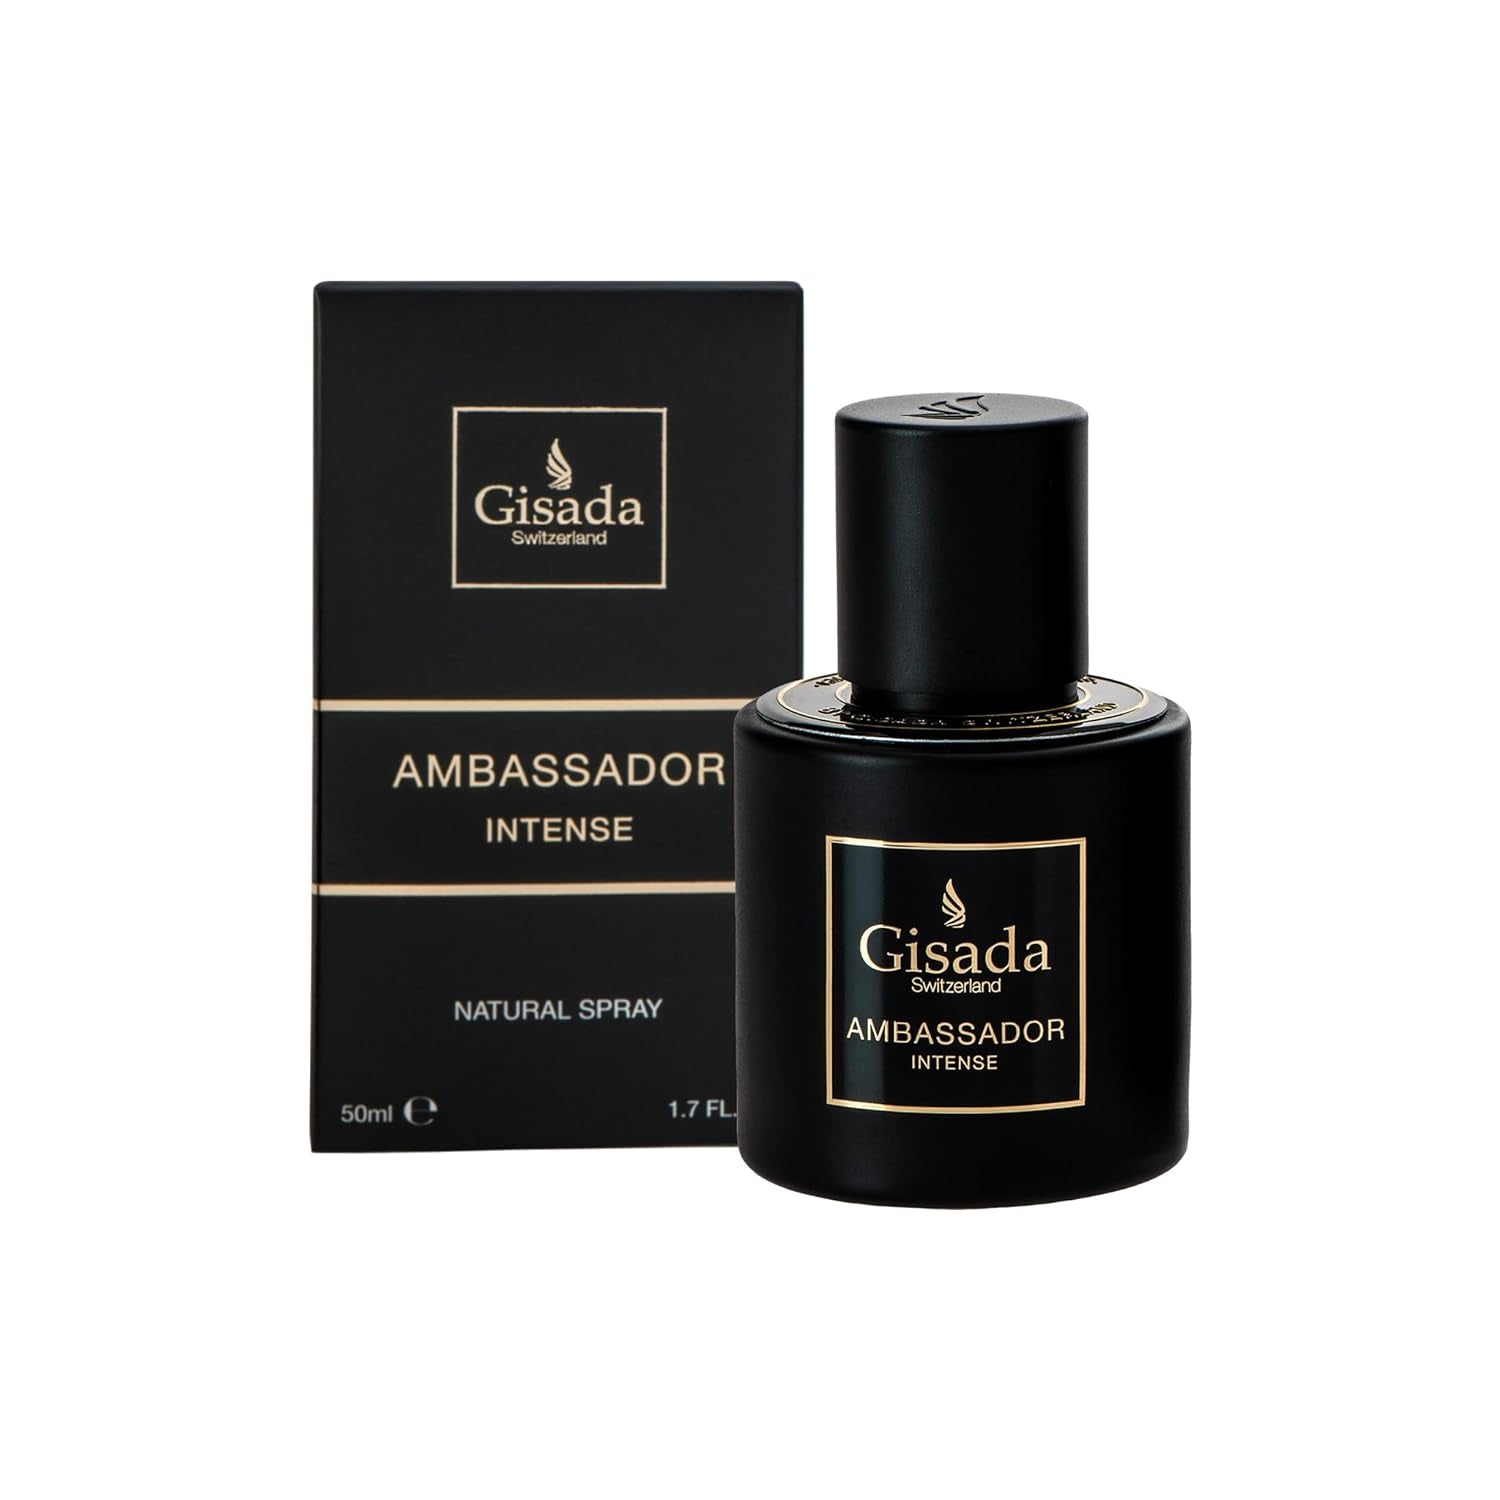 Gisada - Ambassador Intense - Eau de Perfume - 50ML - 1.7 Fl Oz - Spicy, fresh and very lively fragrance for Men - Even more intense, even more lively, even more masculine!